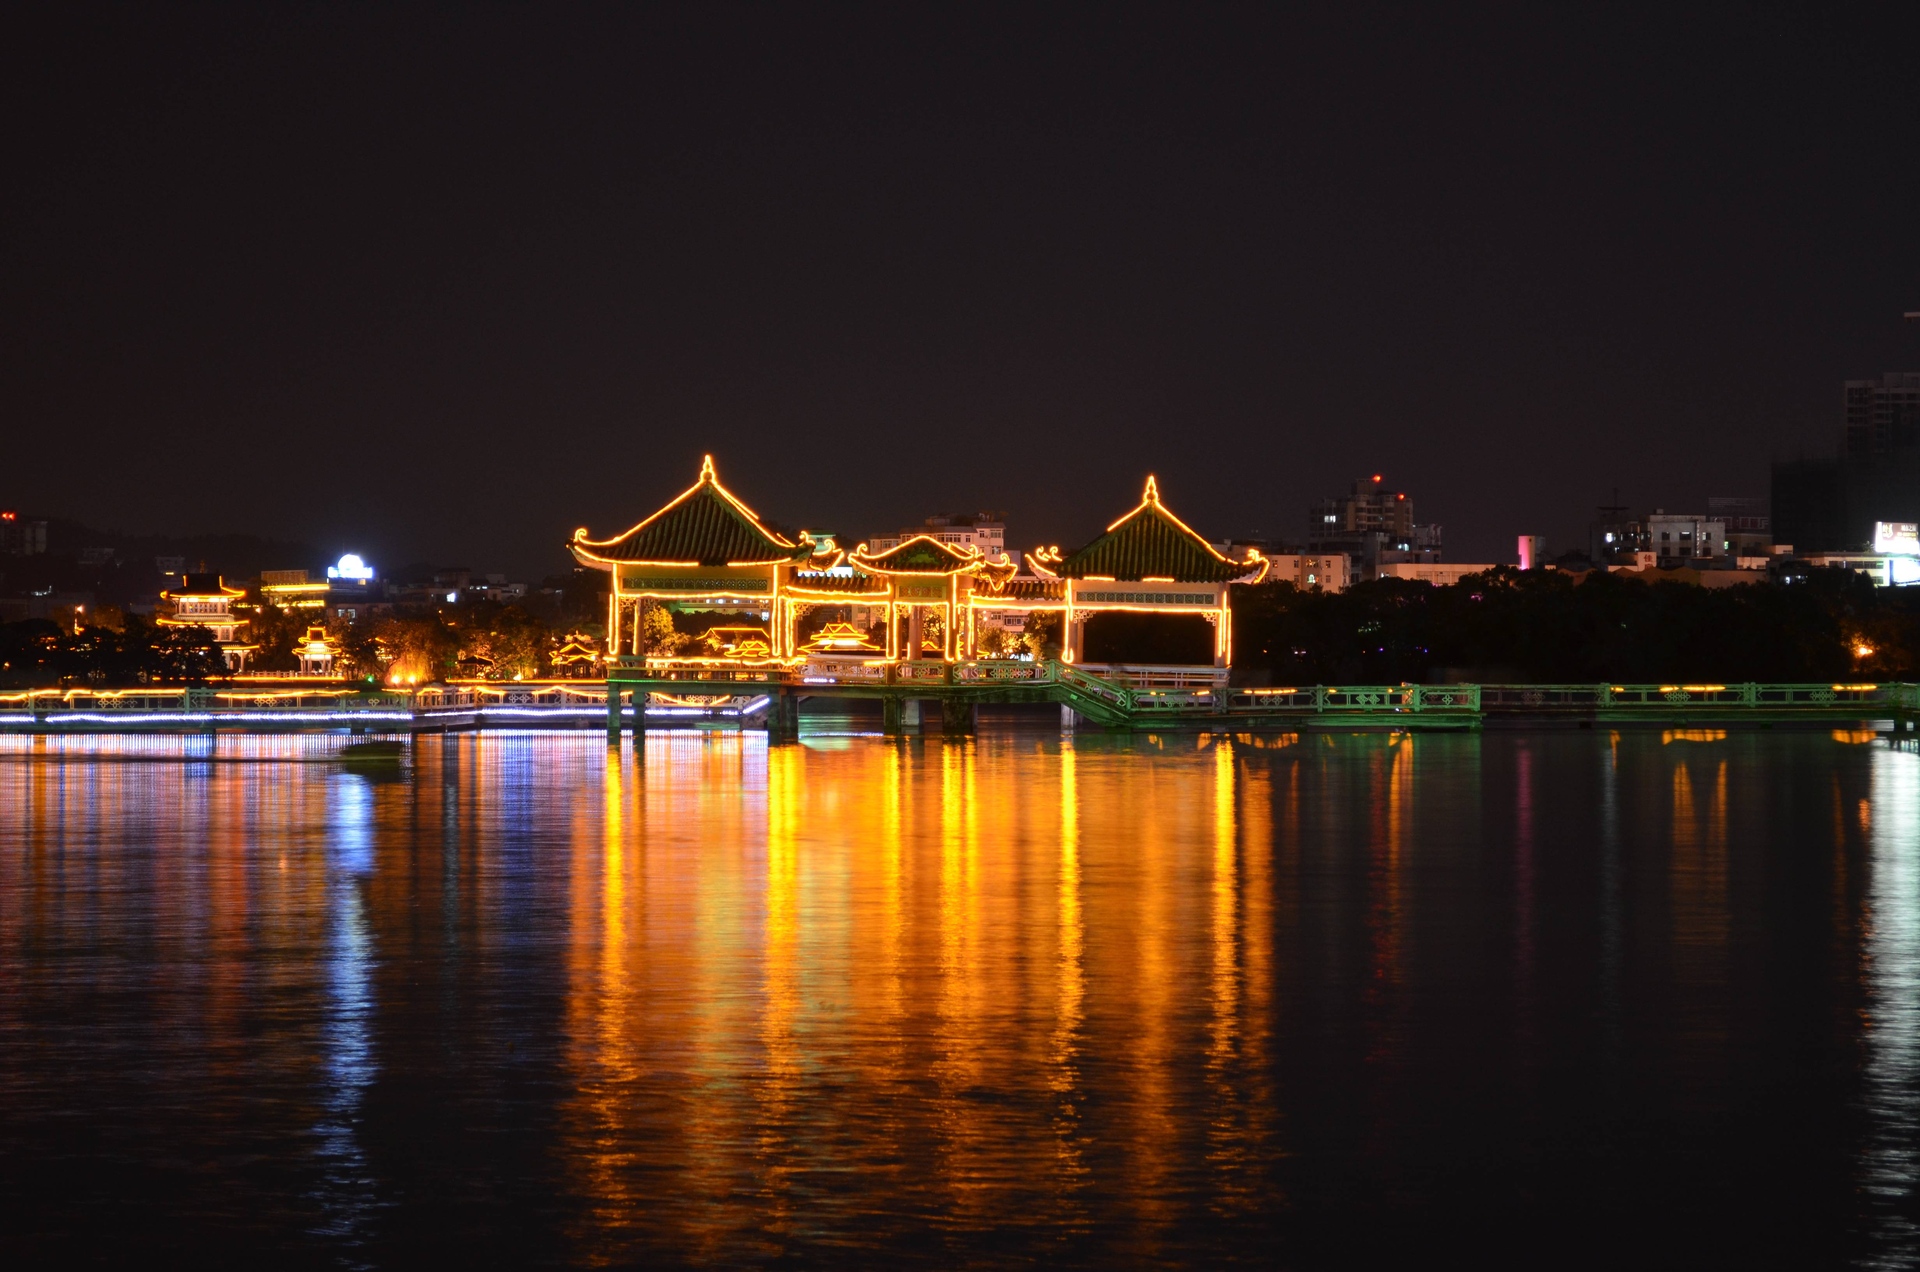 惠州西湖夜景依然美丽~